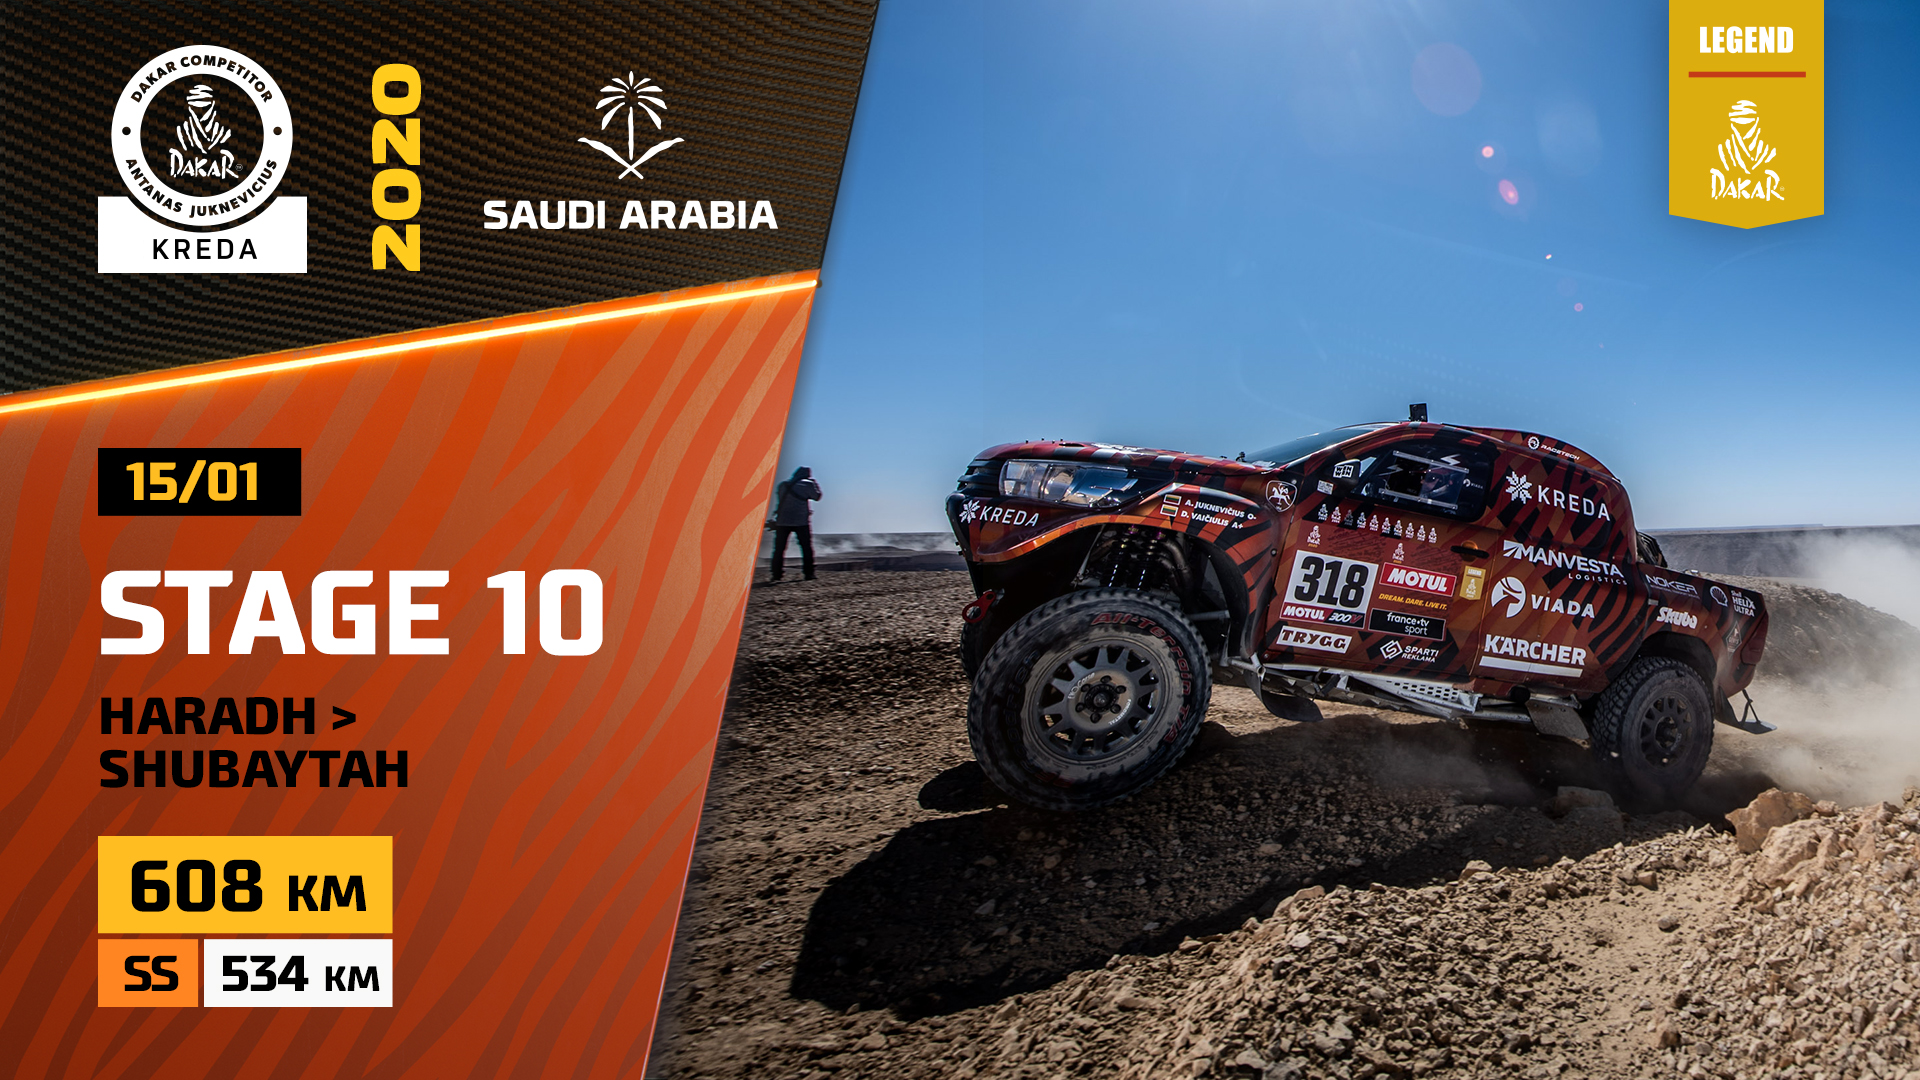 Dakar Rally 2020. Stage 10 Highlights Haradh – Shubaytah in Saudi Arabia